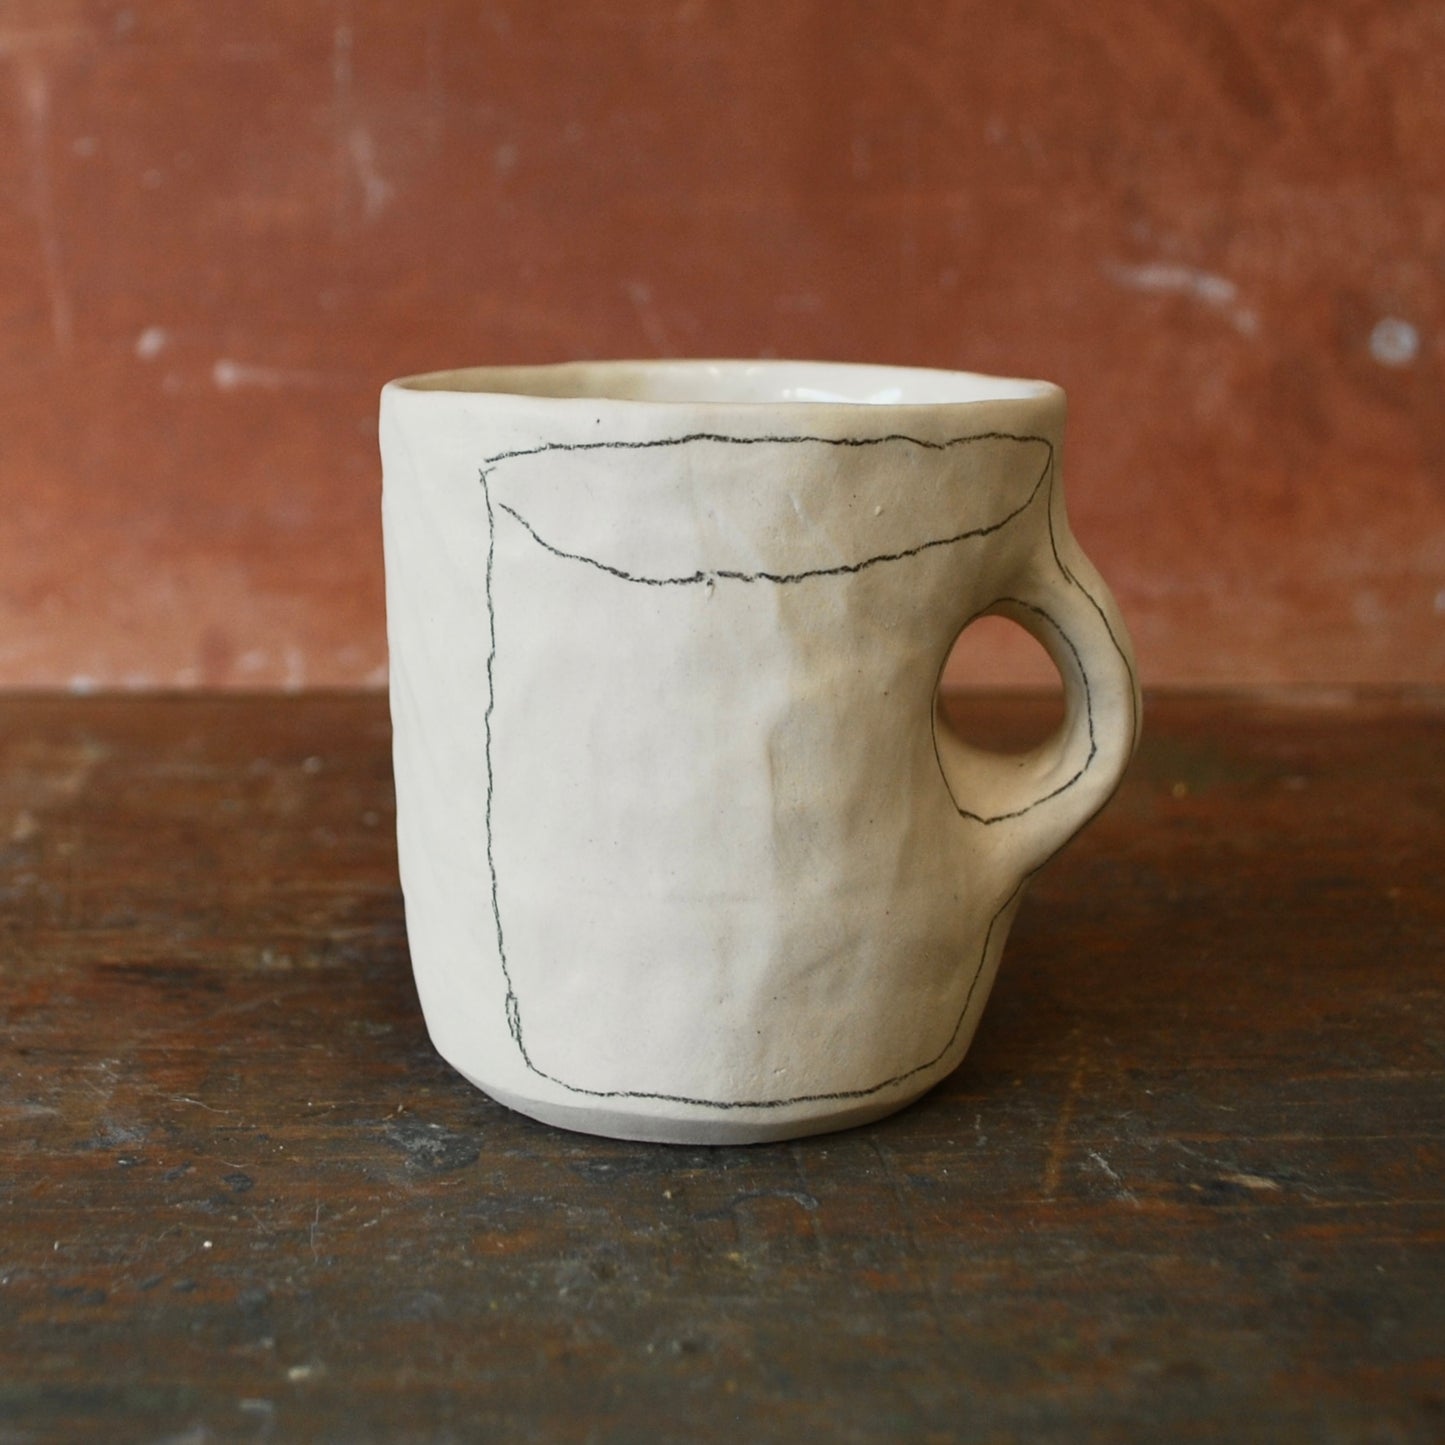 a drawing (a mug)